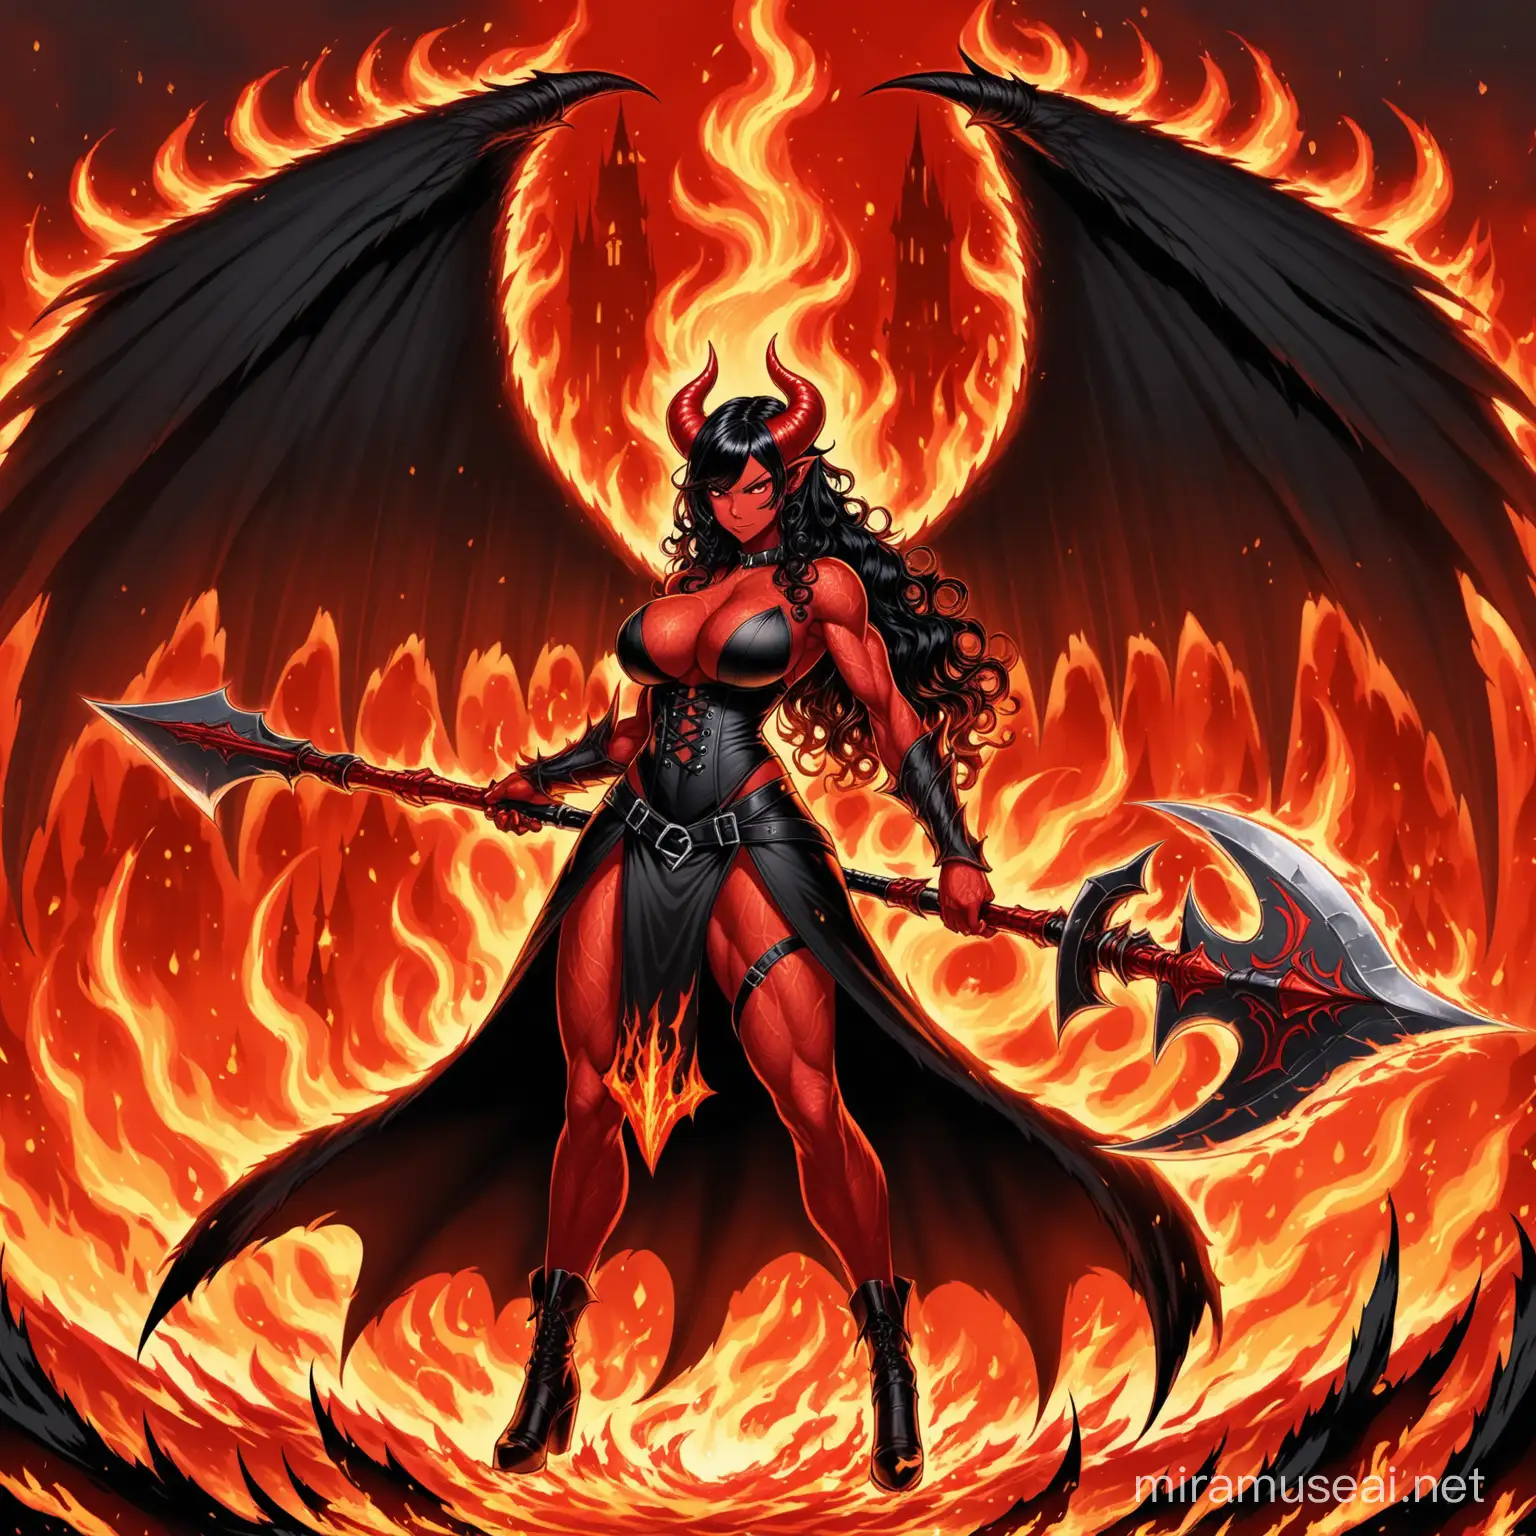 Seductively Powerful Devil Woman Wielding Flaming HalberdAxe